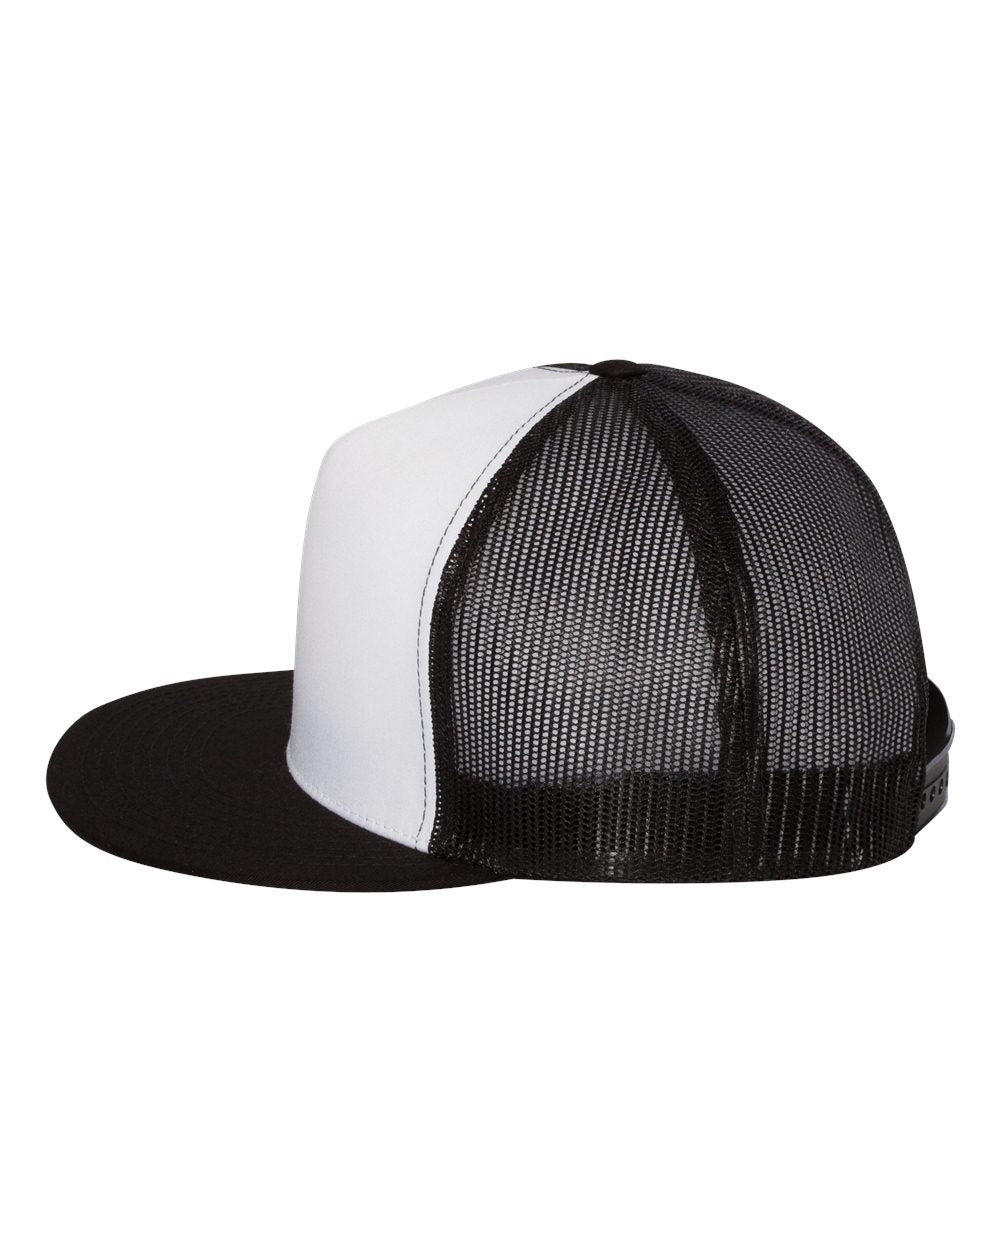 Black/White Hat Flat Bill